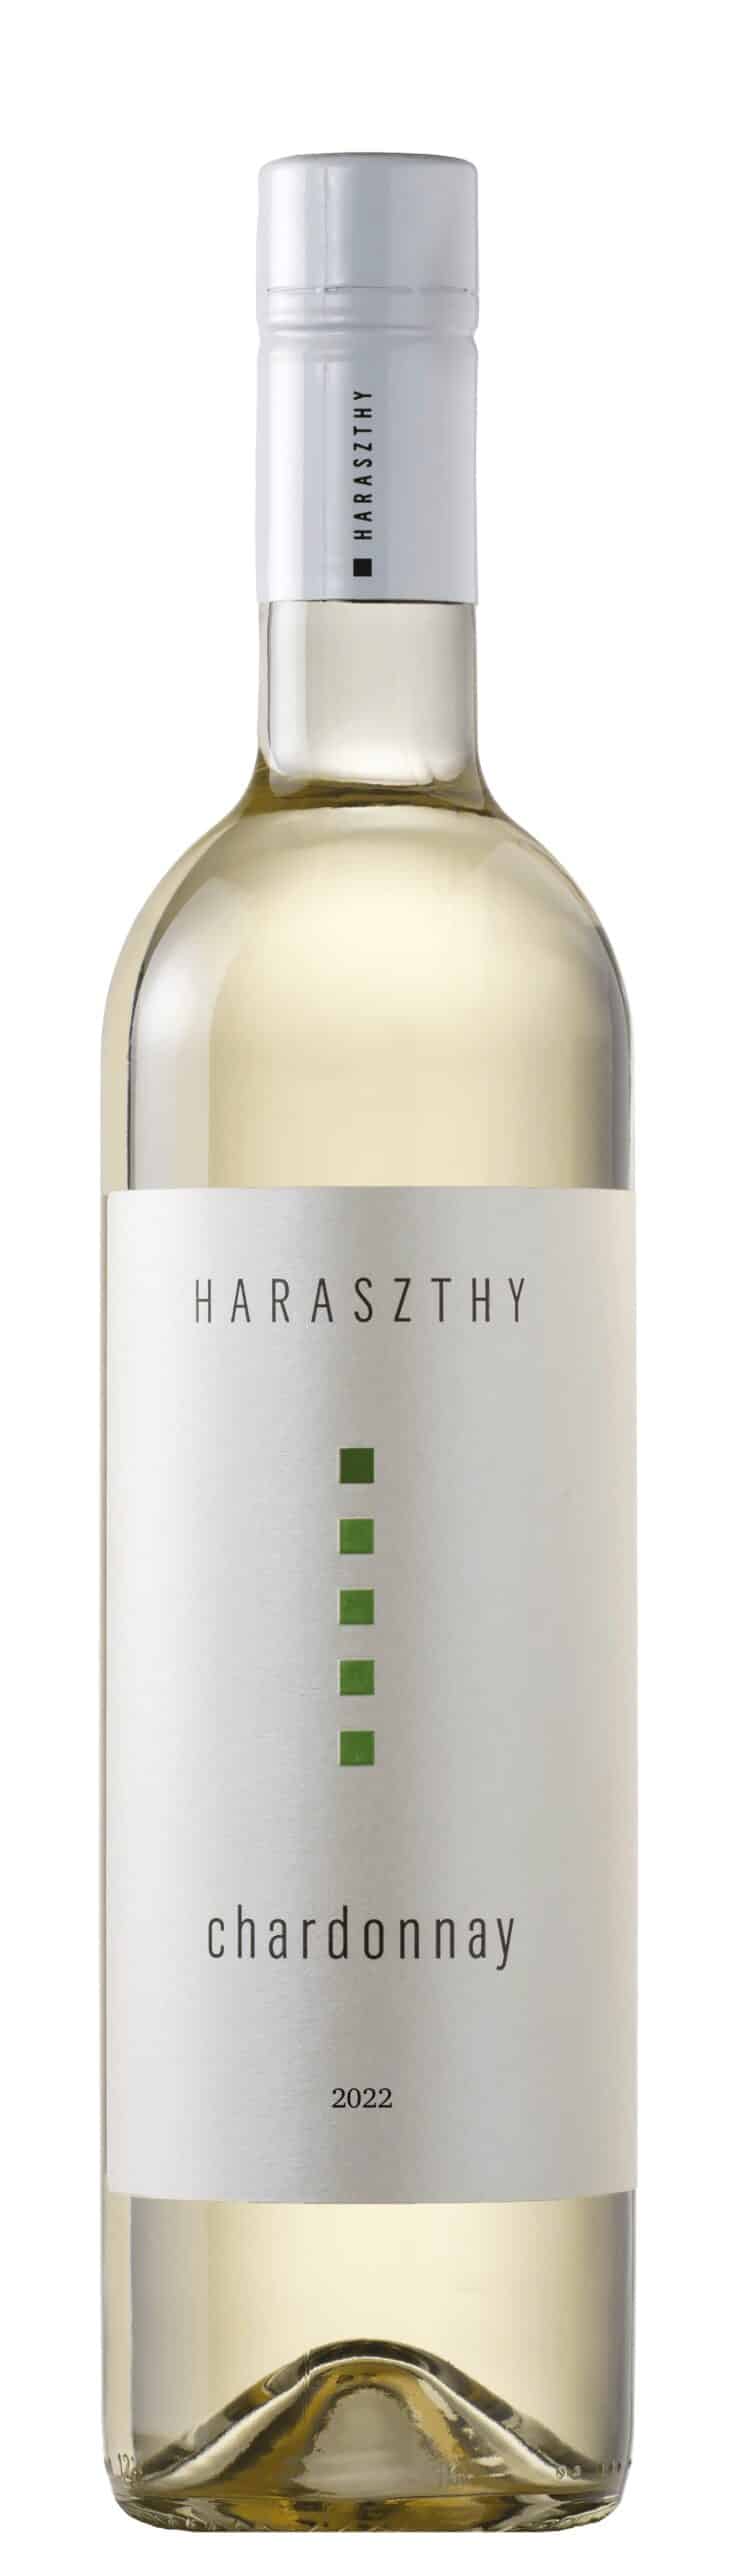 Haraszthy Chardonnay